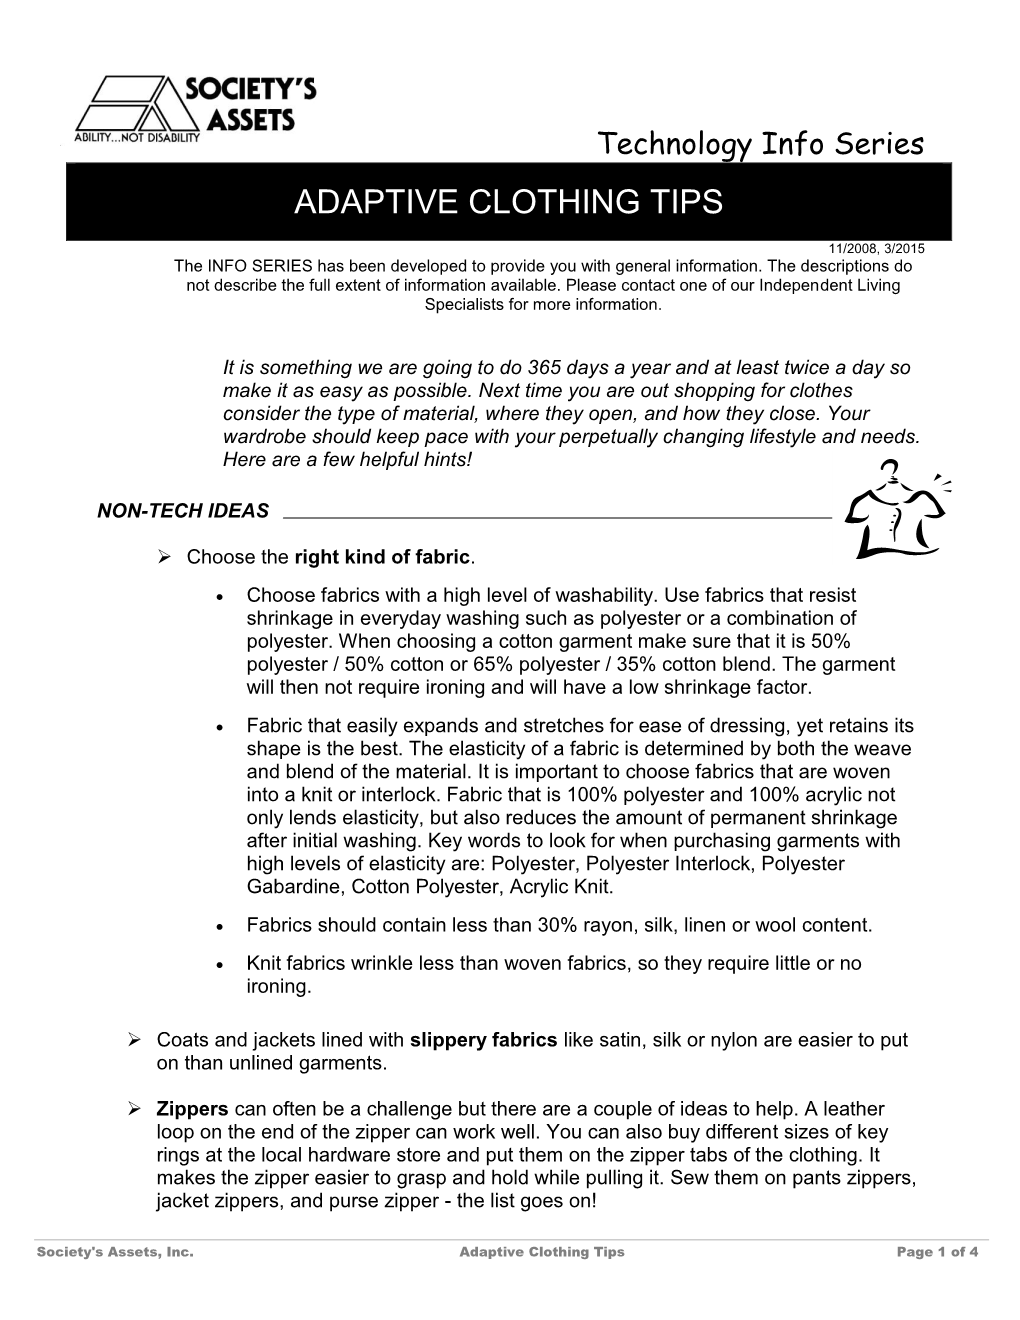 Adaptive Clothing Tips